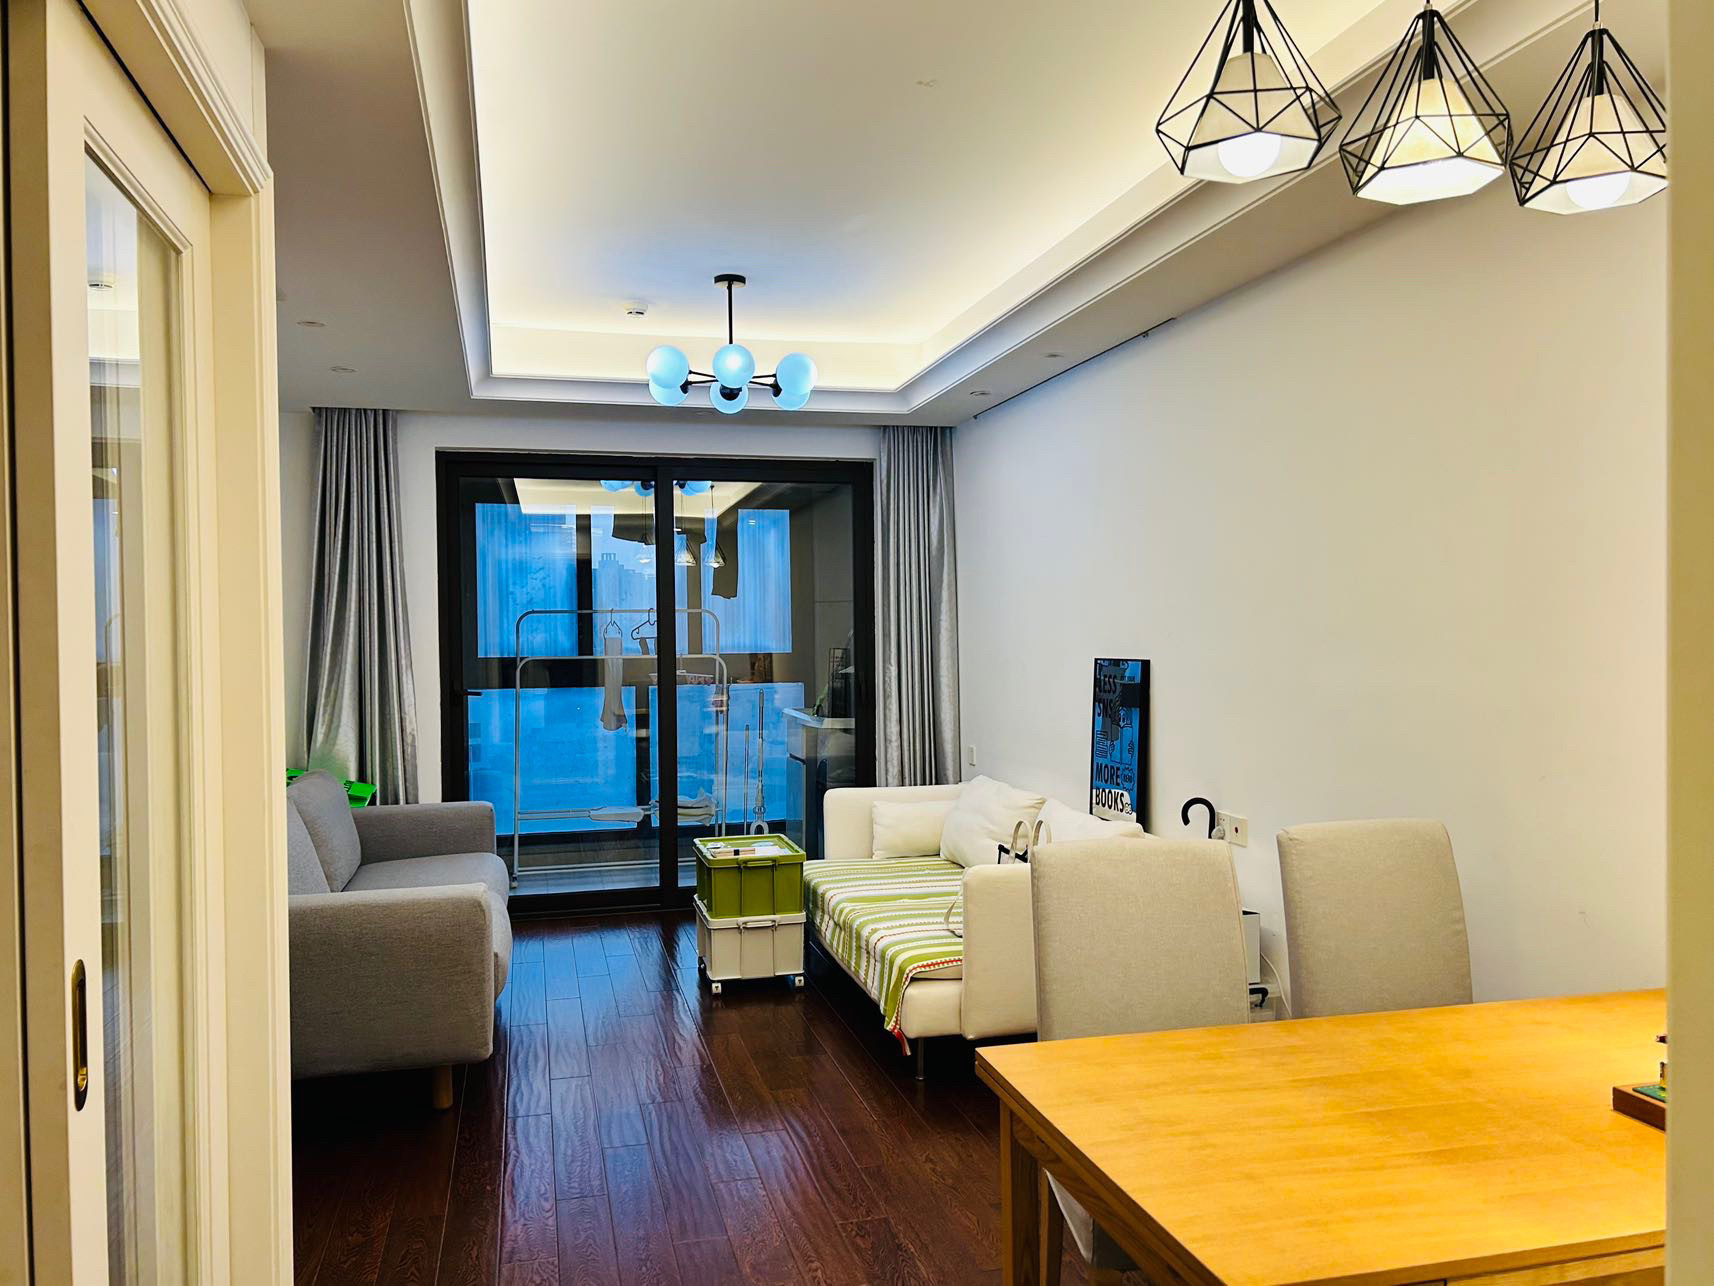 Hangzhou-Binjiang-Cozy Home,Clean&Comfy,No Gender Limit,Hustle & Bustle,“Friends”,Chilled